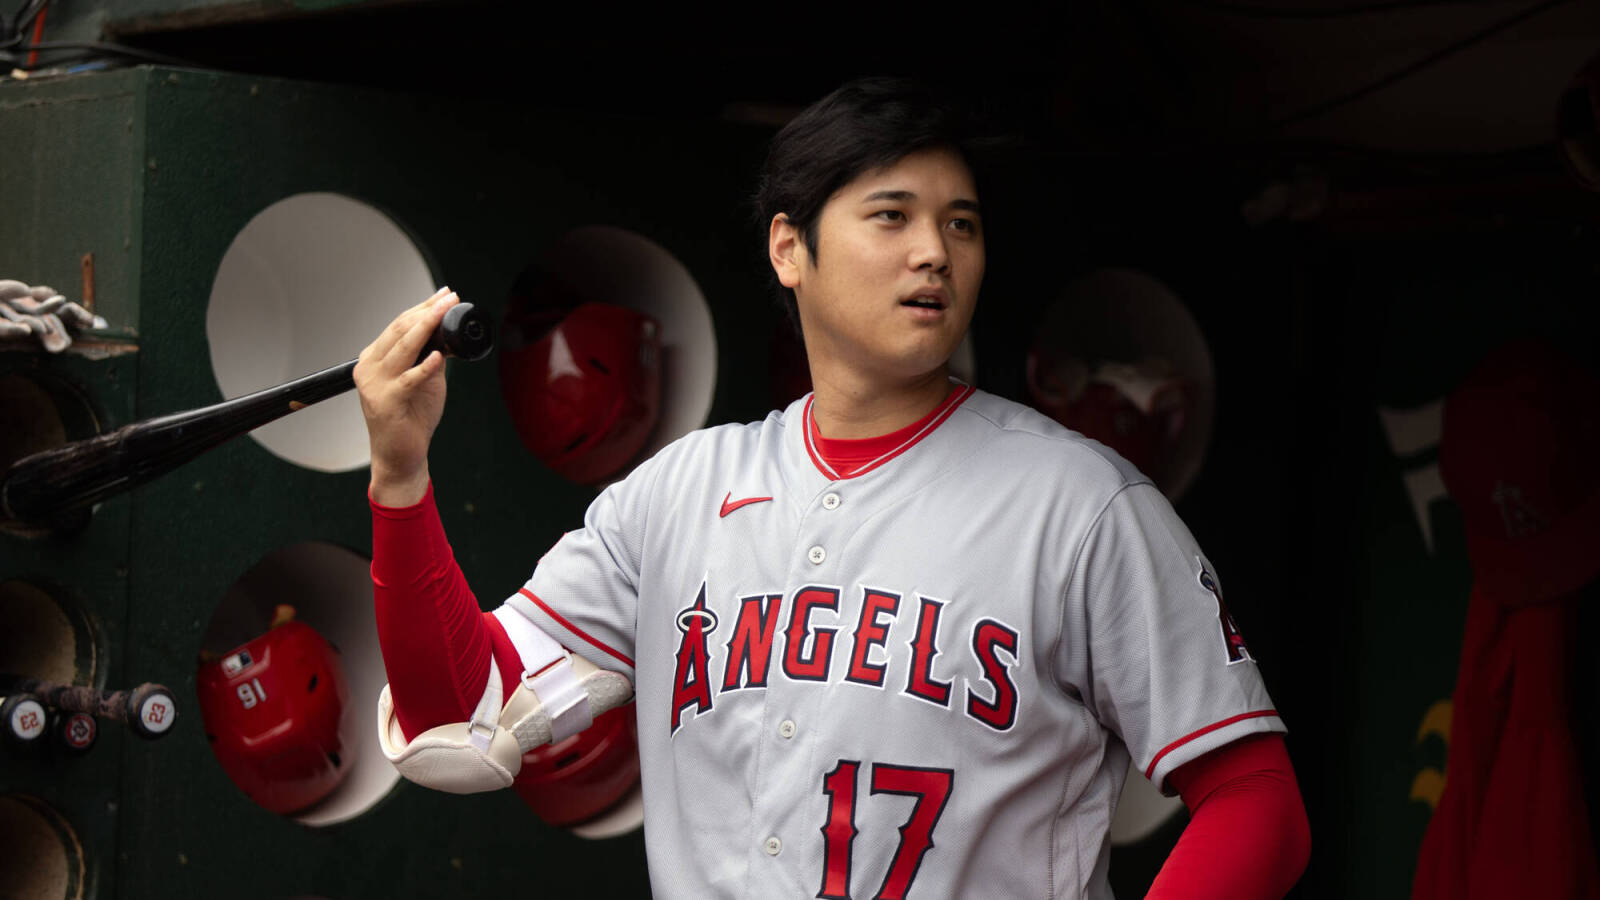 Angels release statement on Shohei Ohtani leaving for Dodgers | Yardbarker